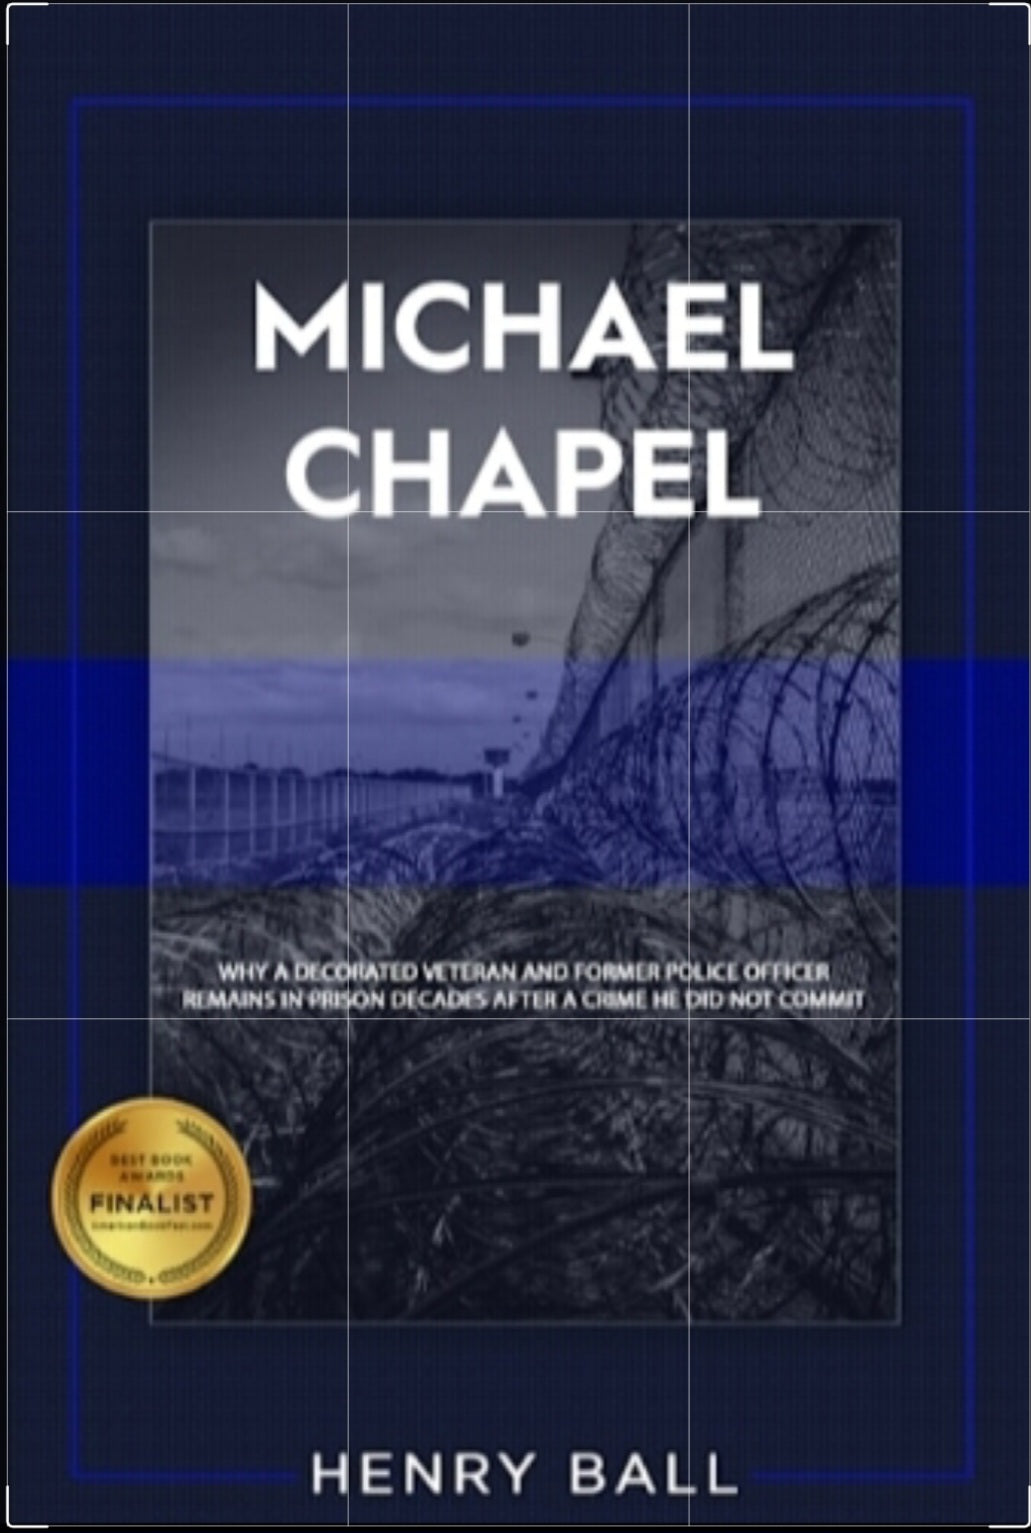 Hardcover - Michael Chapel